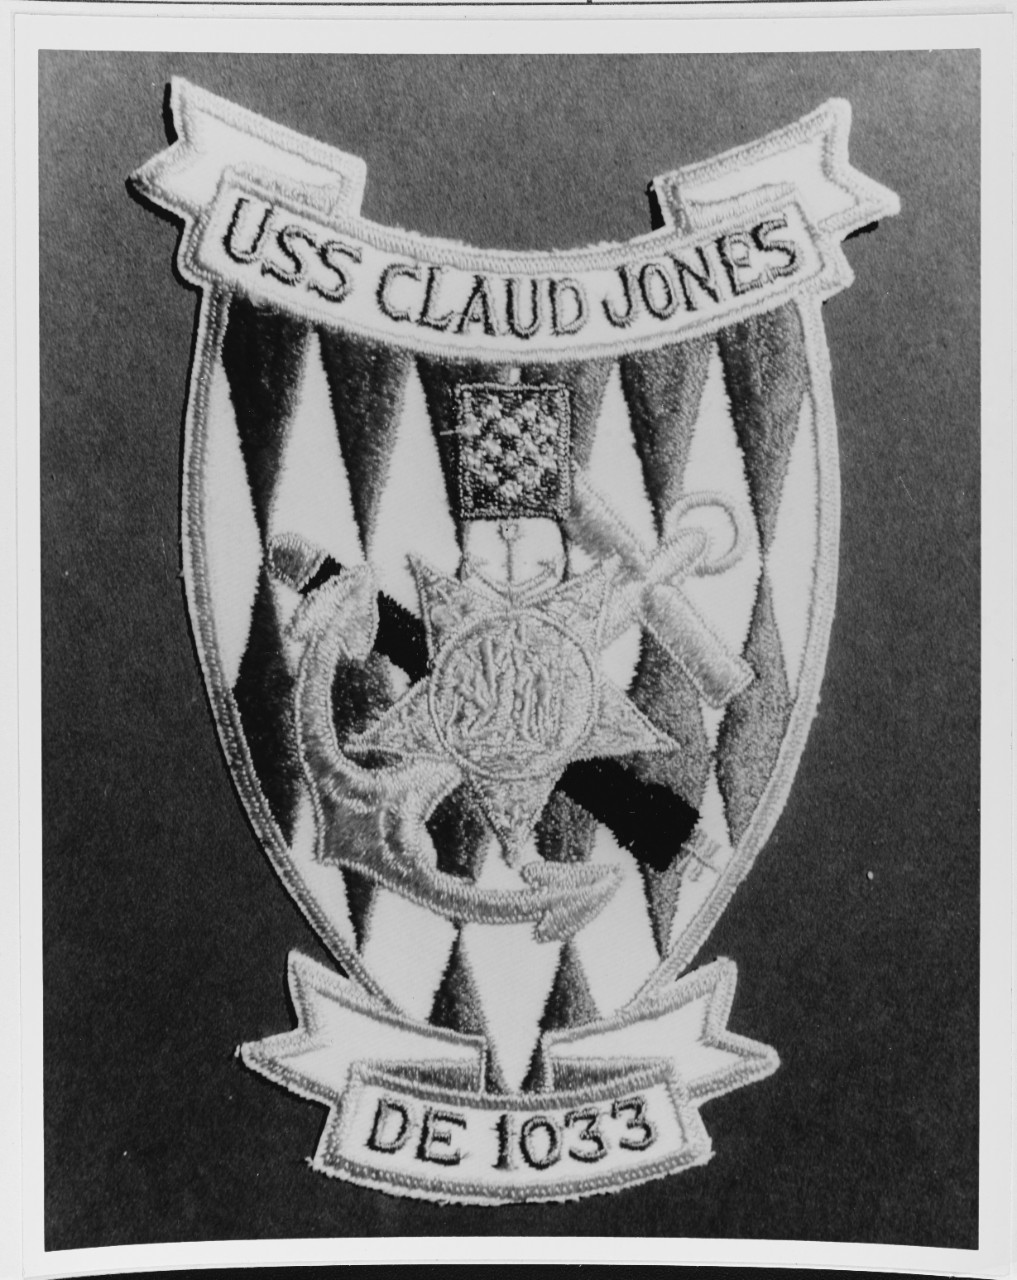 Insignia: USS CLAUD JONES (DE - 1033)